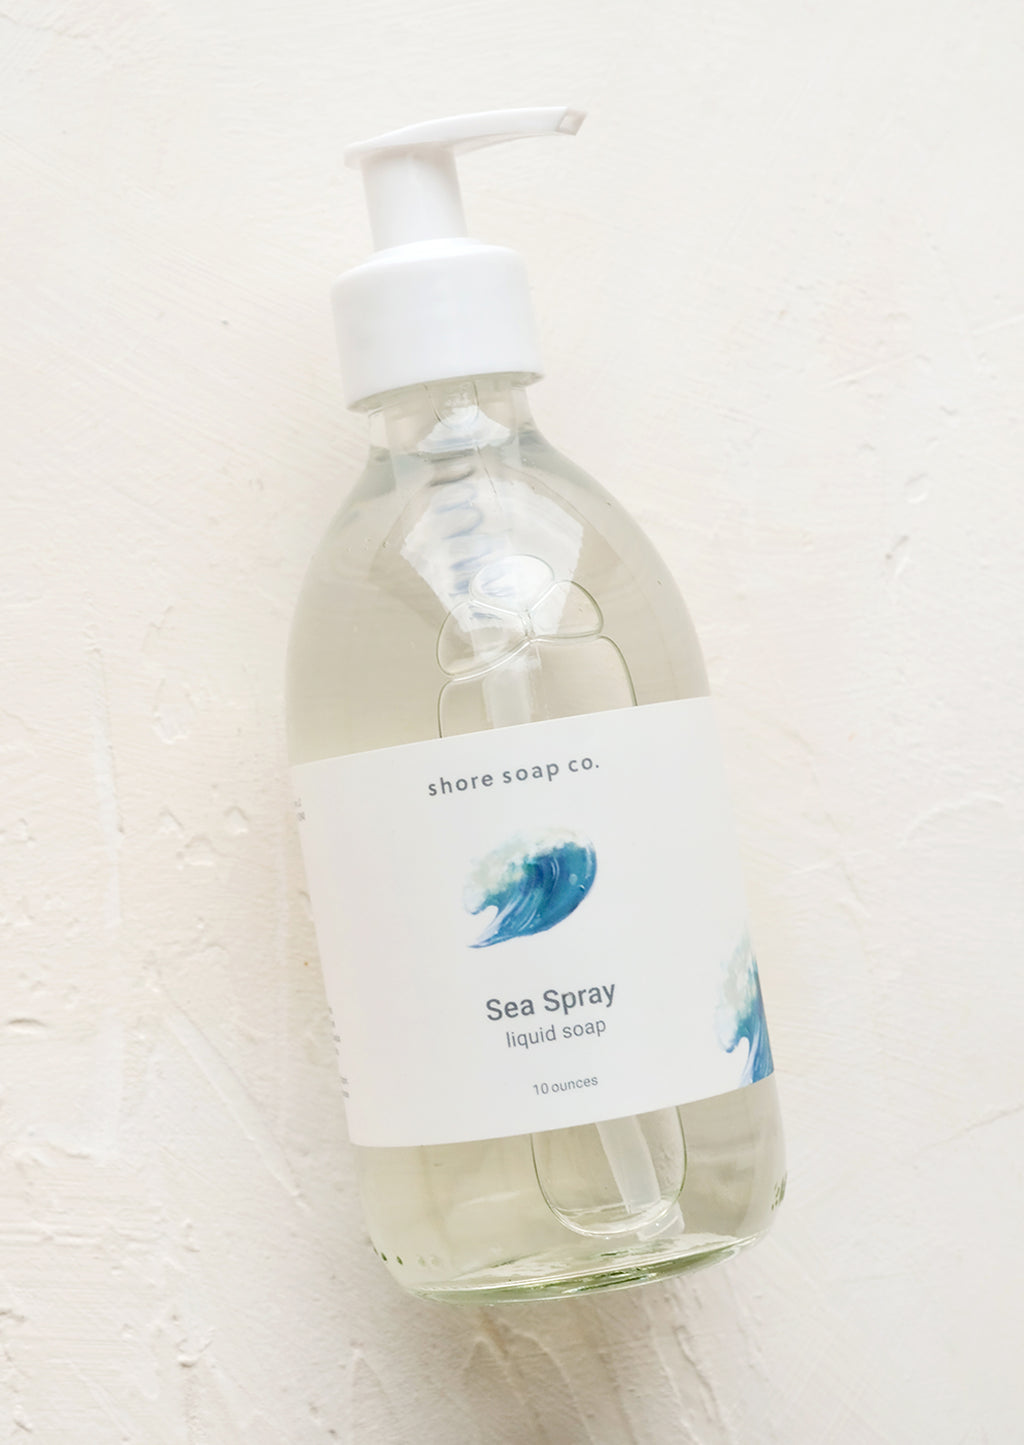 Sea Spray: A glass pump bottle containing liquid soap in "Sea spray" scent.